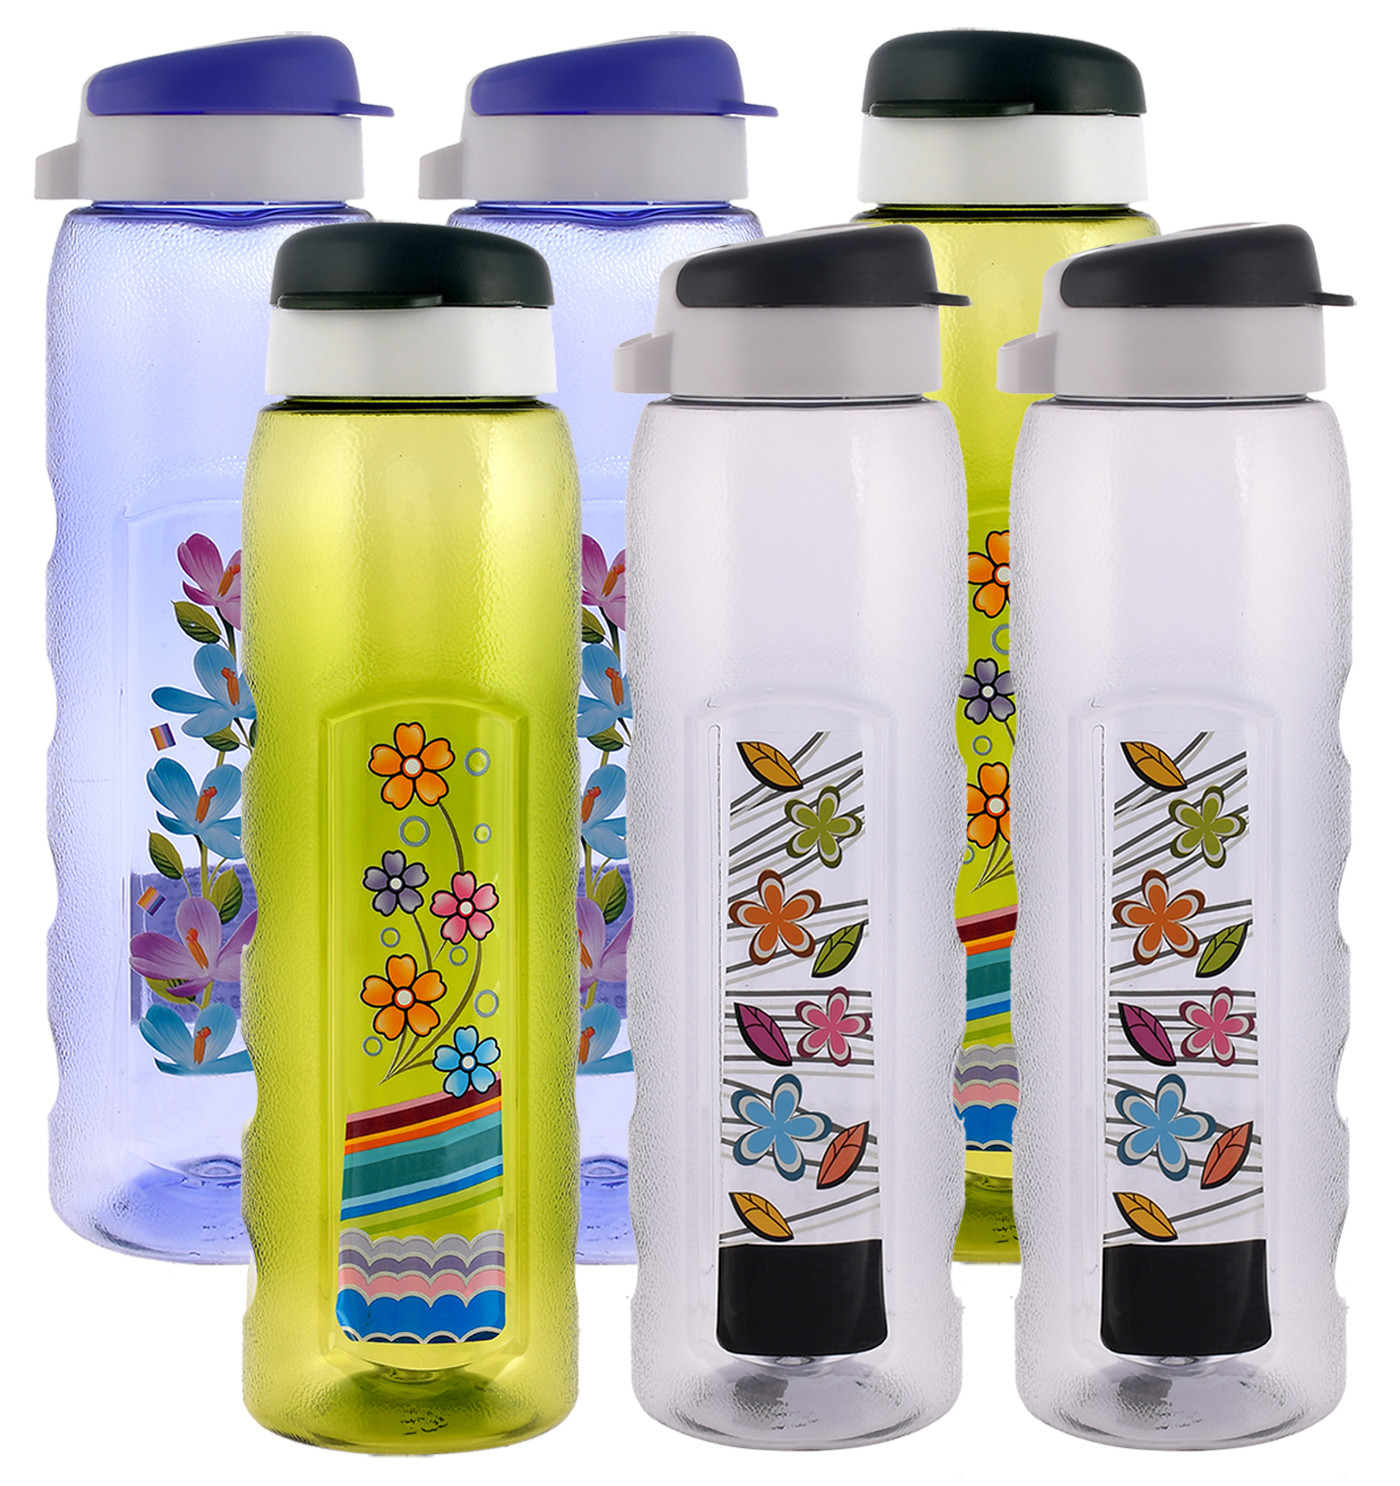 Kuber Industries Unbreakable BPA & Leak Free Plastic Water Bottle With Sipper- 1 Litre, Pack of 6 (Pruple & Green & Black)